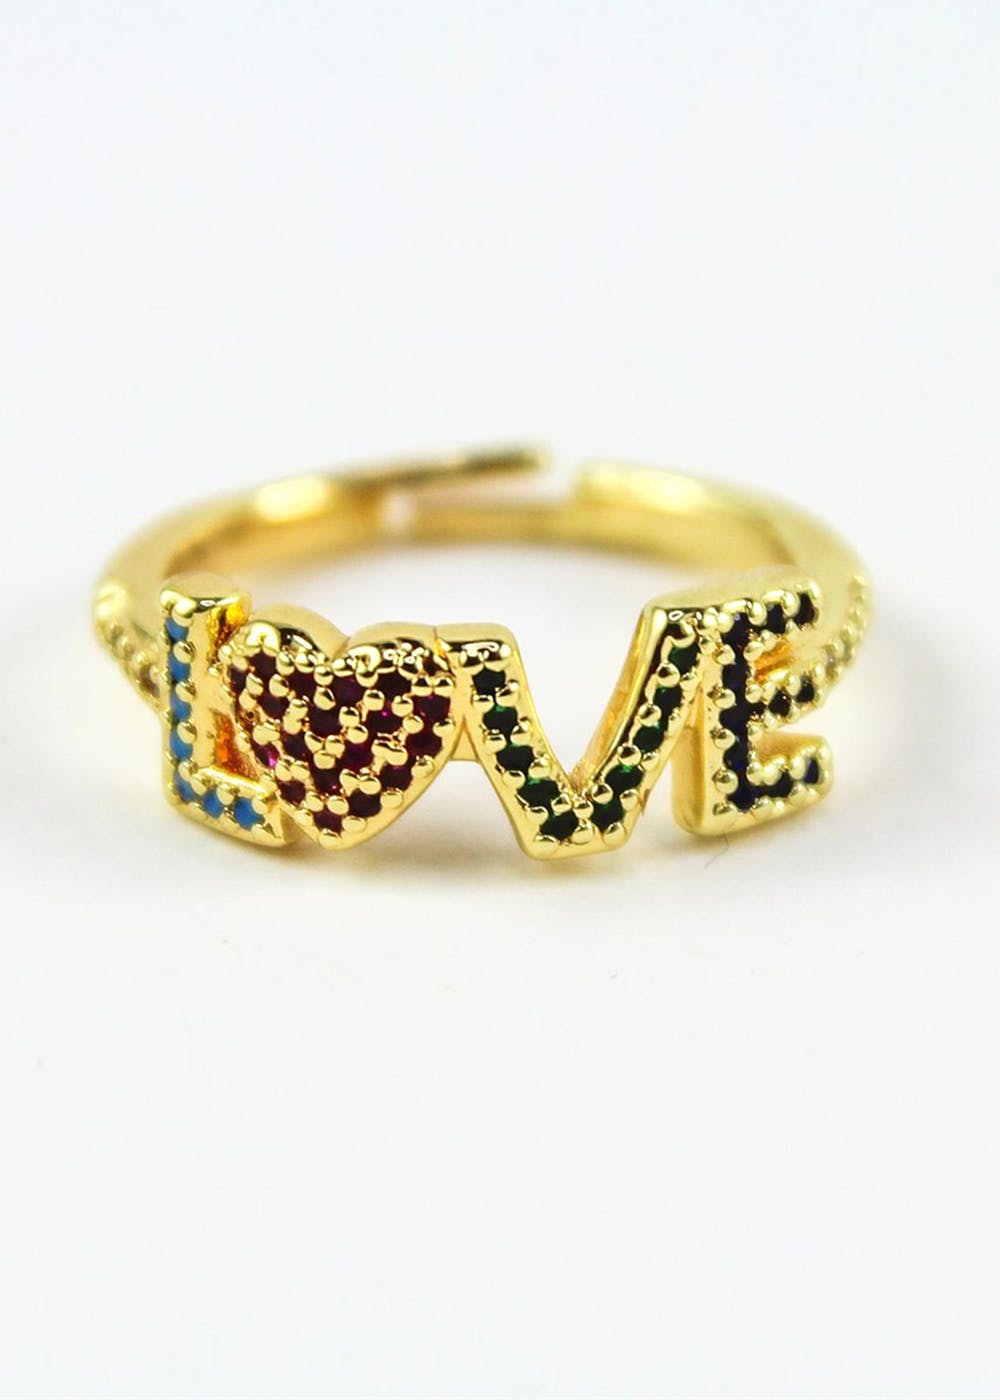 Get Golden Love Text Finger Ring at ₹ 549 | LBB Shop